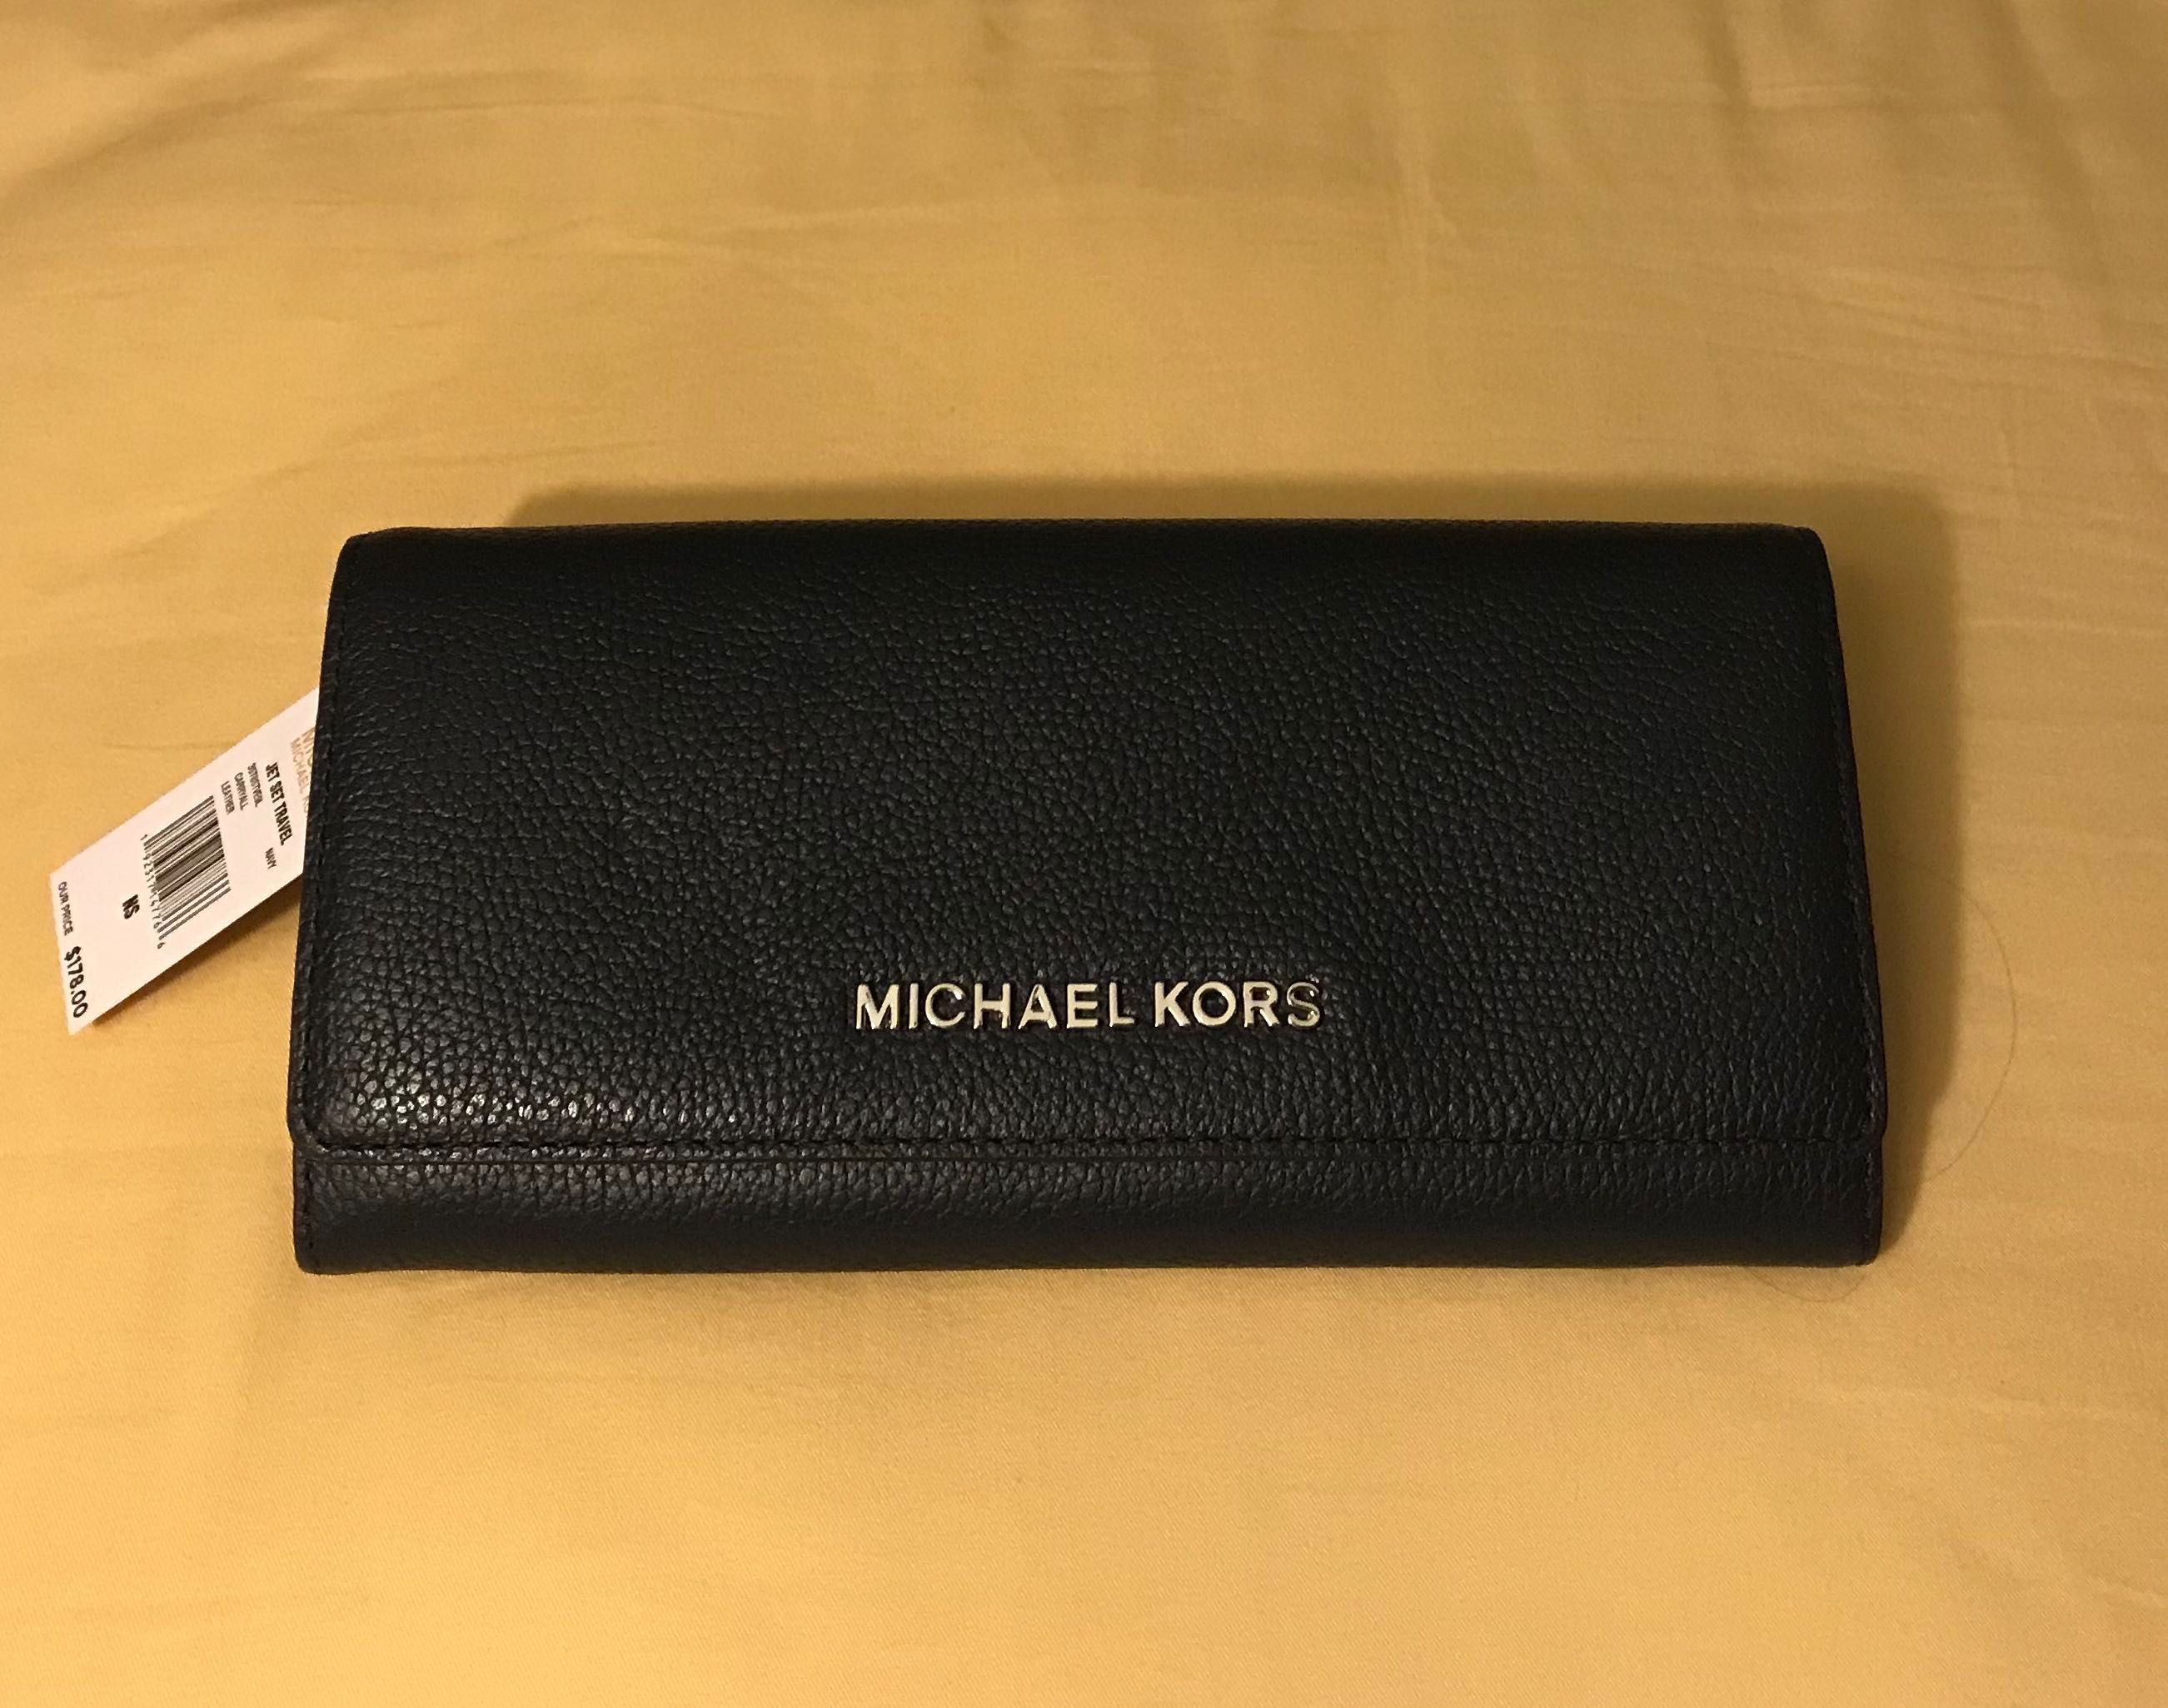 michael kors wallet 2018